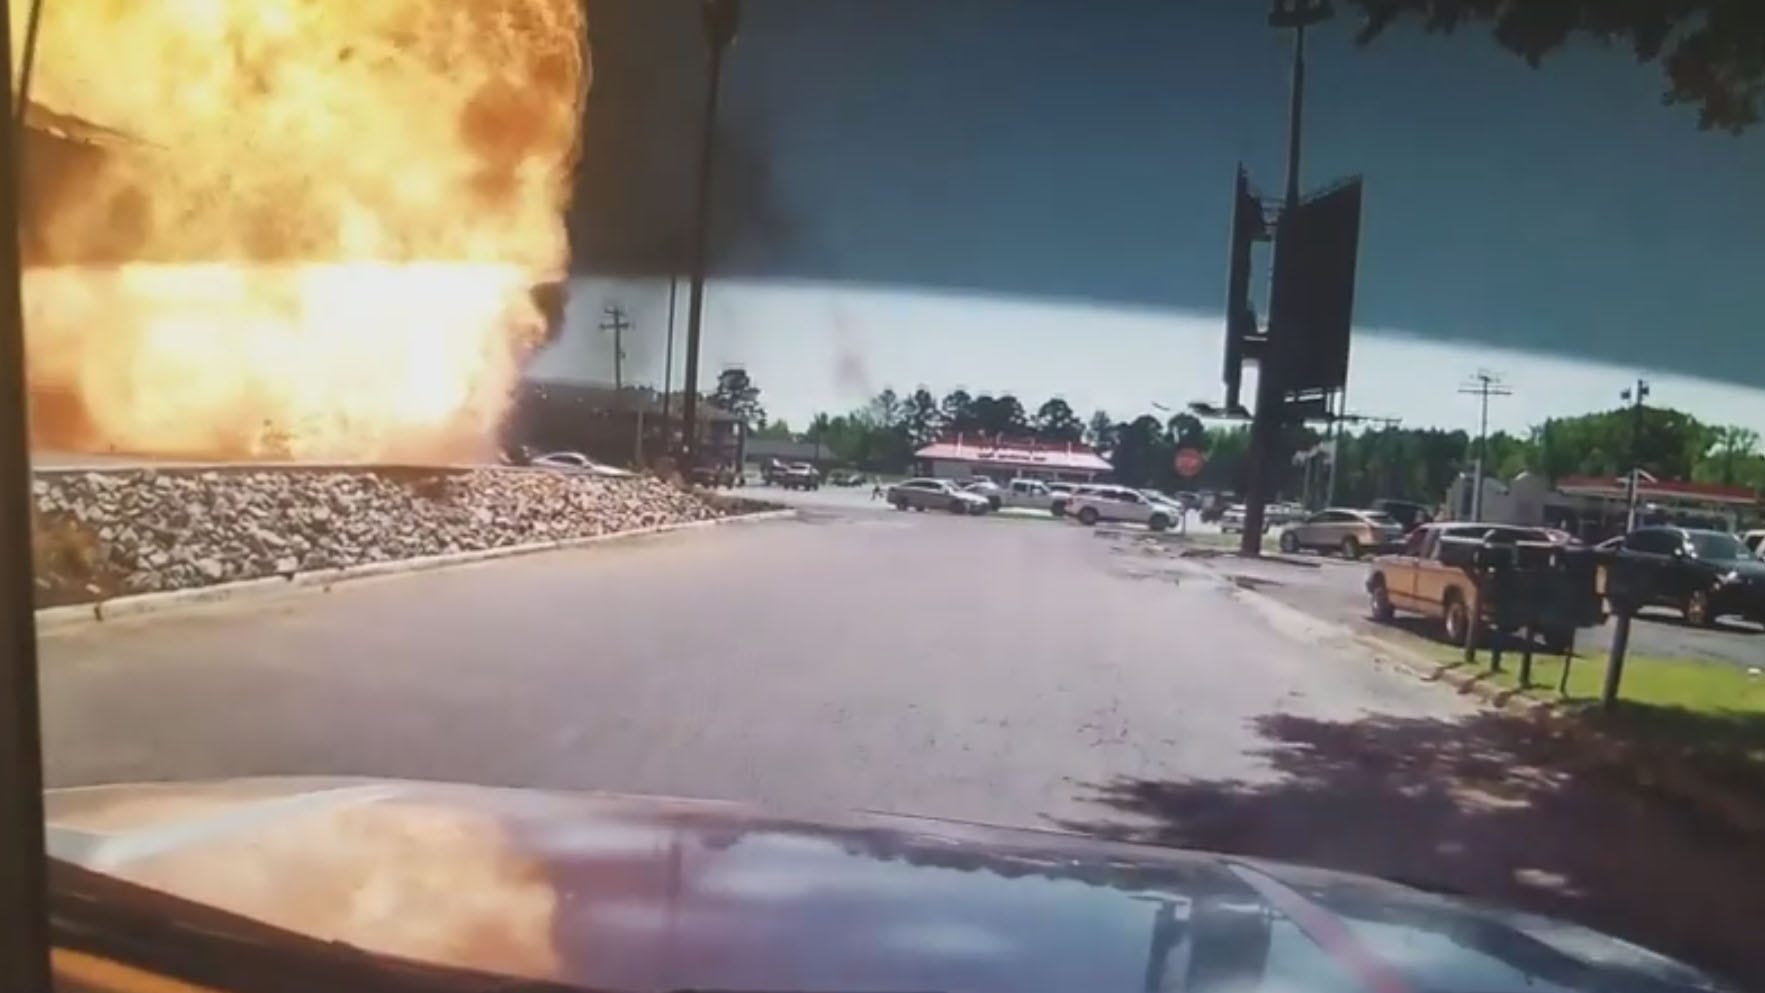 Truck explodes in Burger King drive-thru